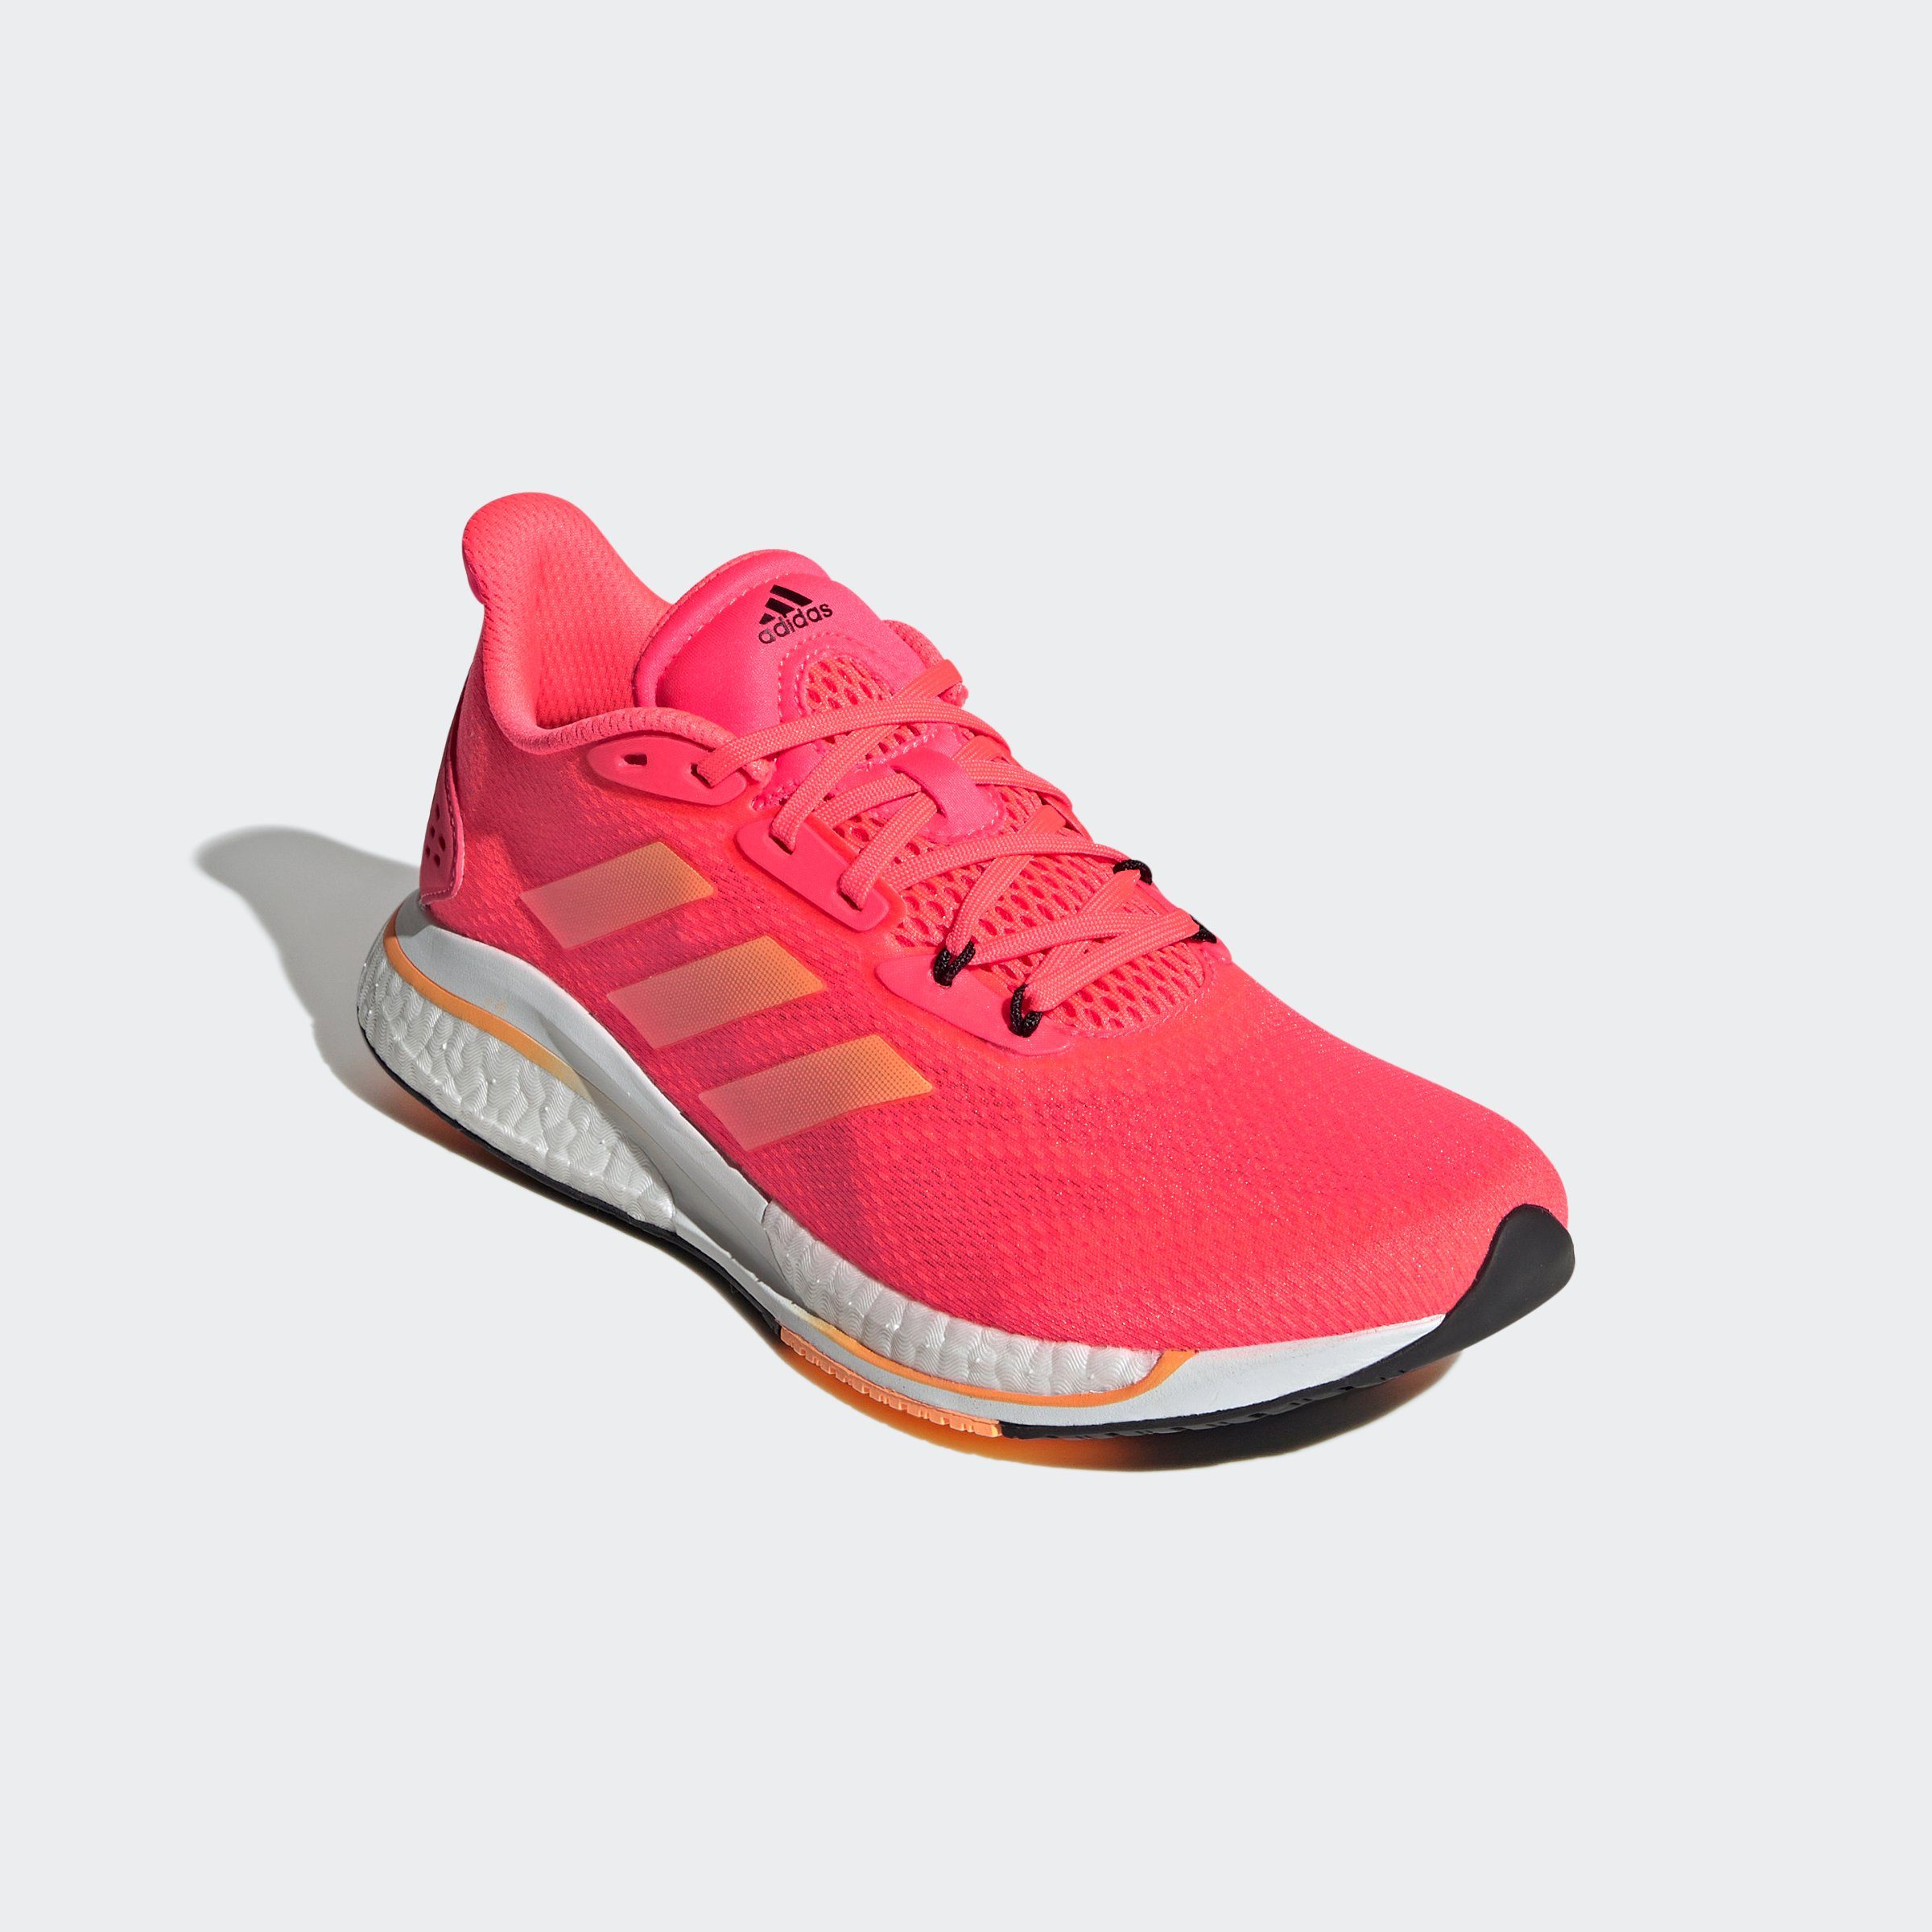 Adidas Supernova Damen Laufschuhe online kaufen | OTTO